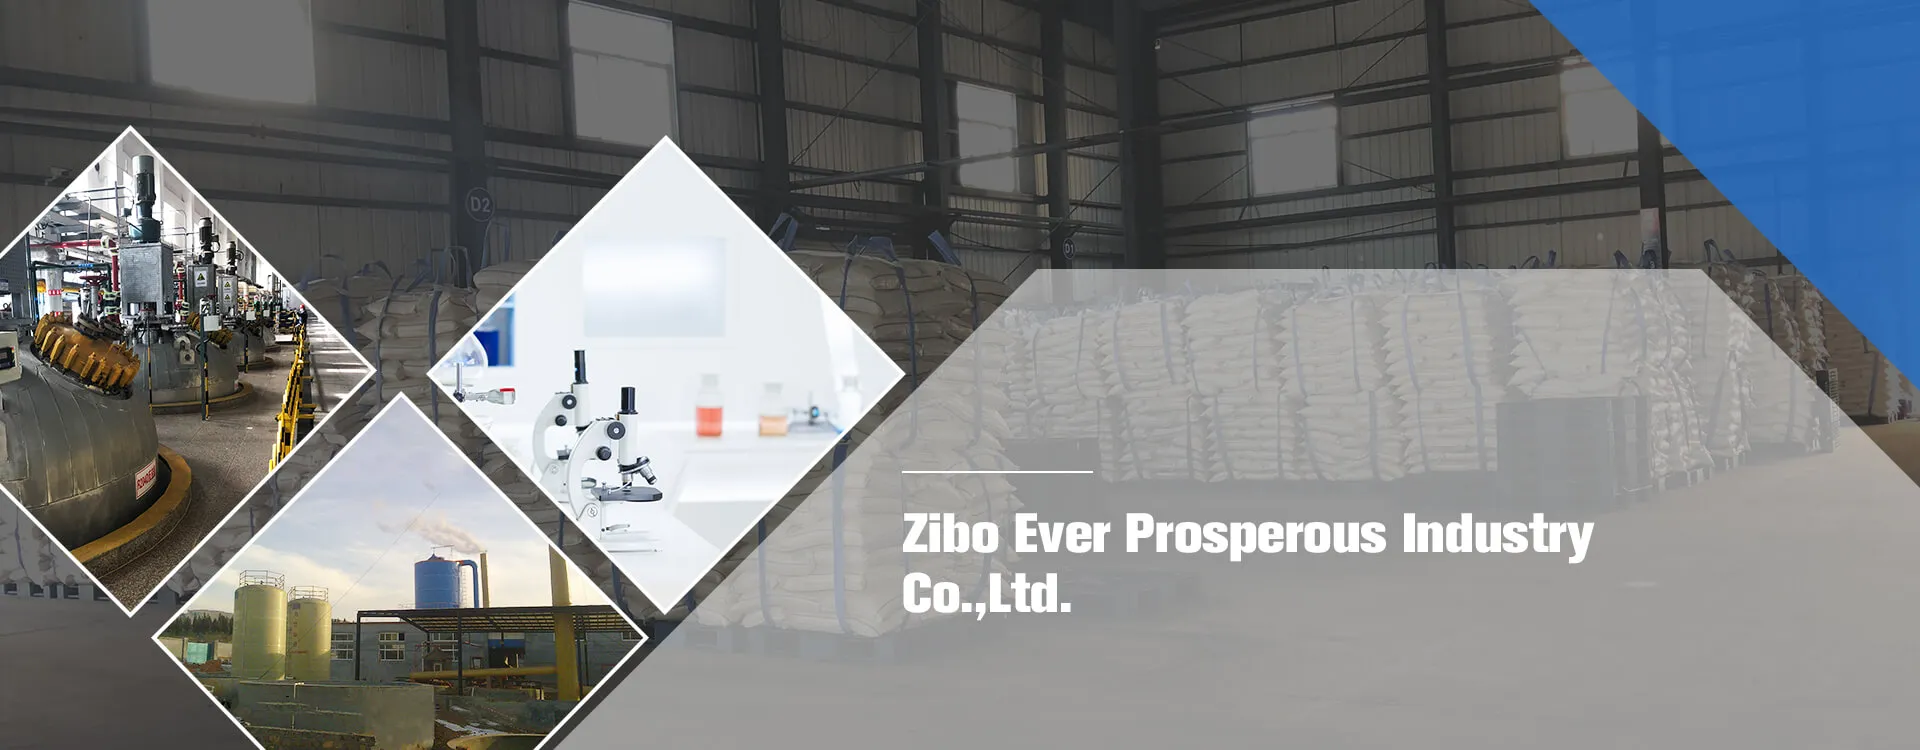 Zibo Ever Prosperous Industry Co., Ltd.